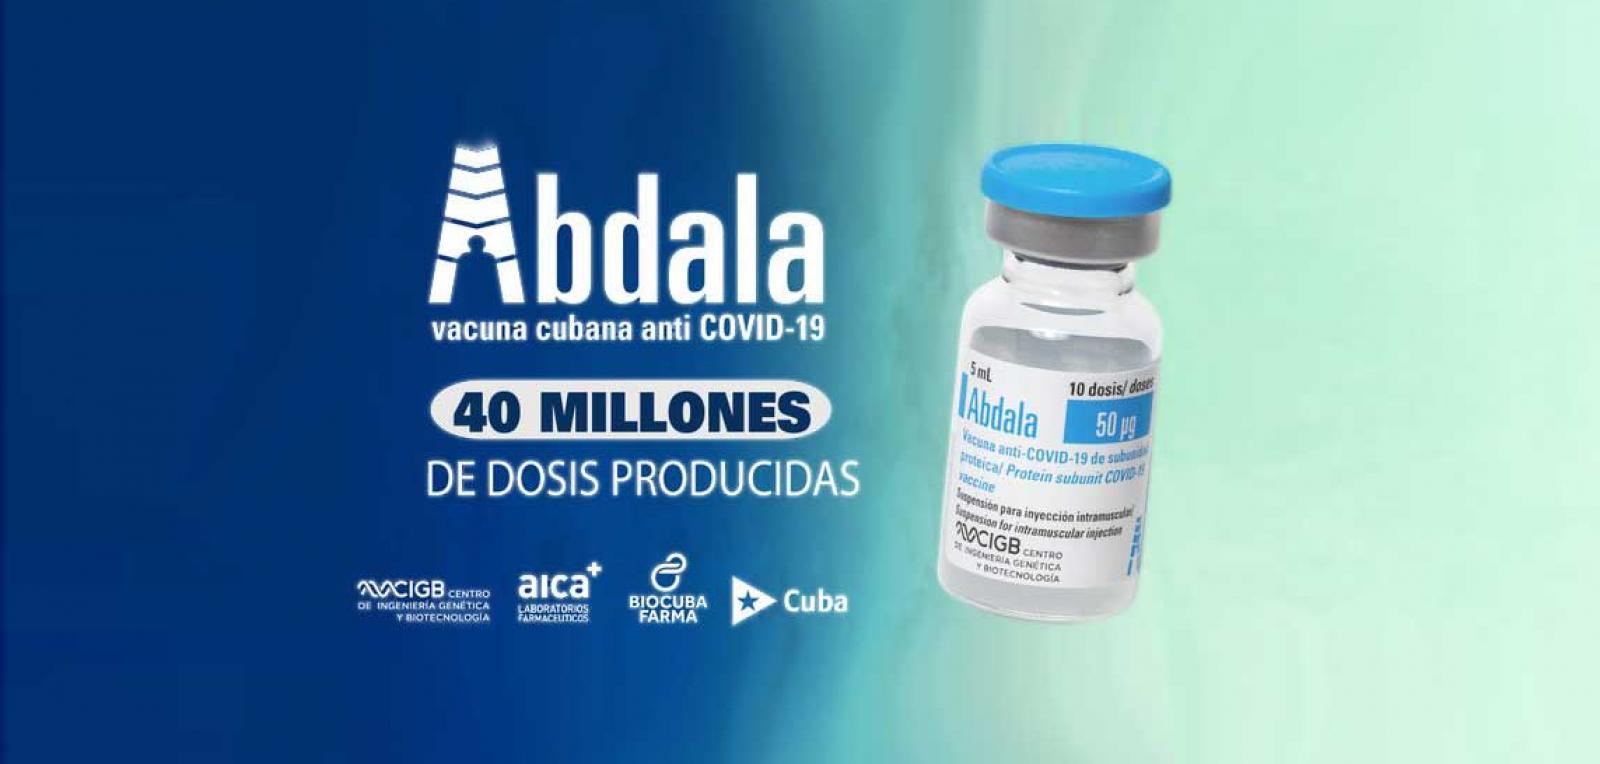 Cuba: 40 million doses produced of Abdala vaccine